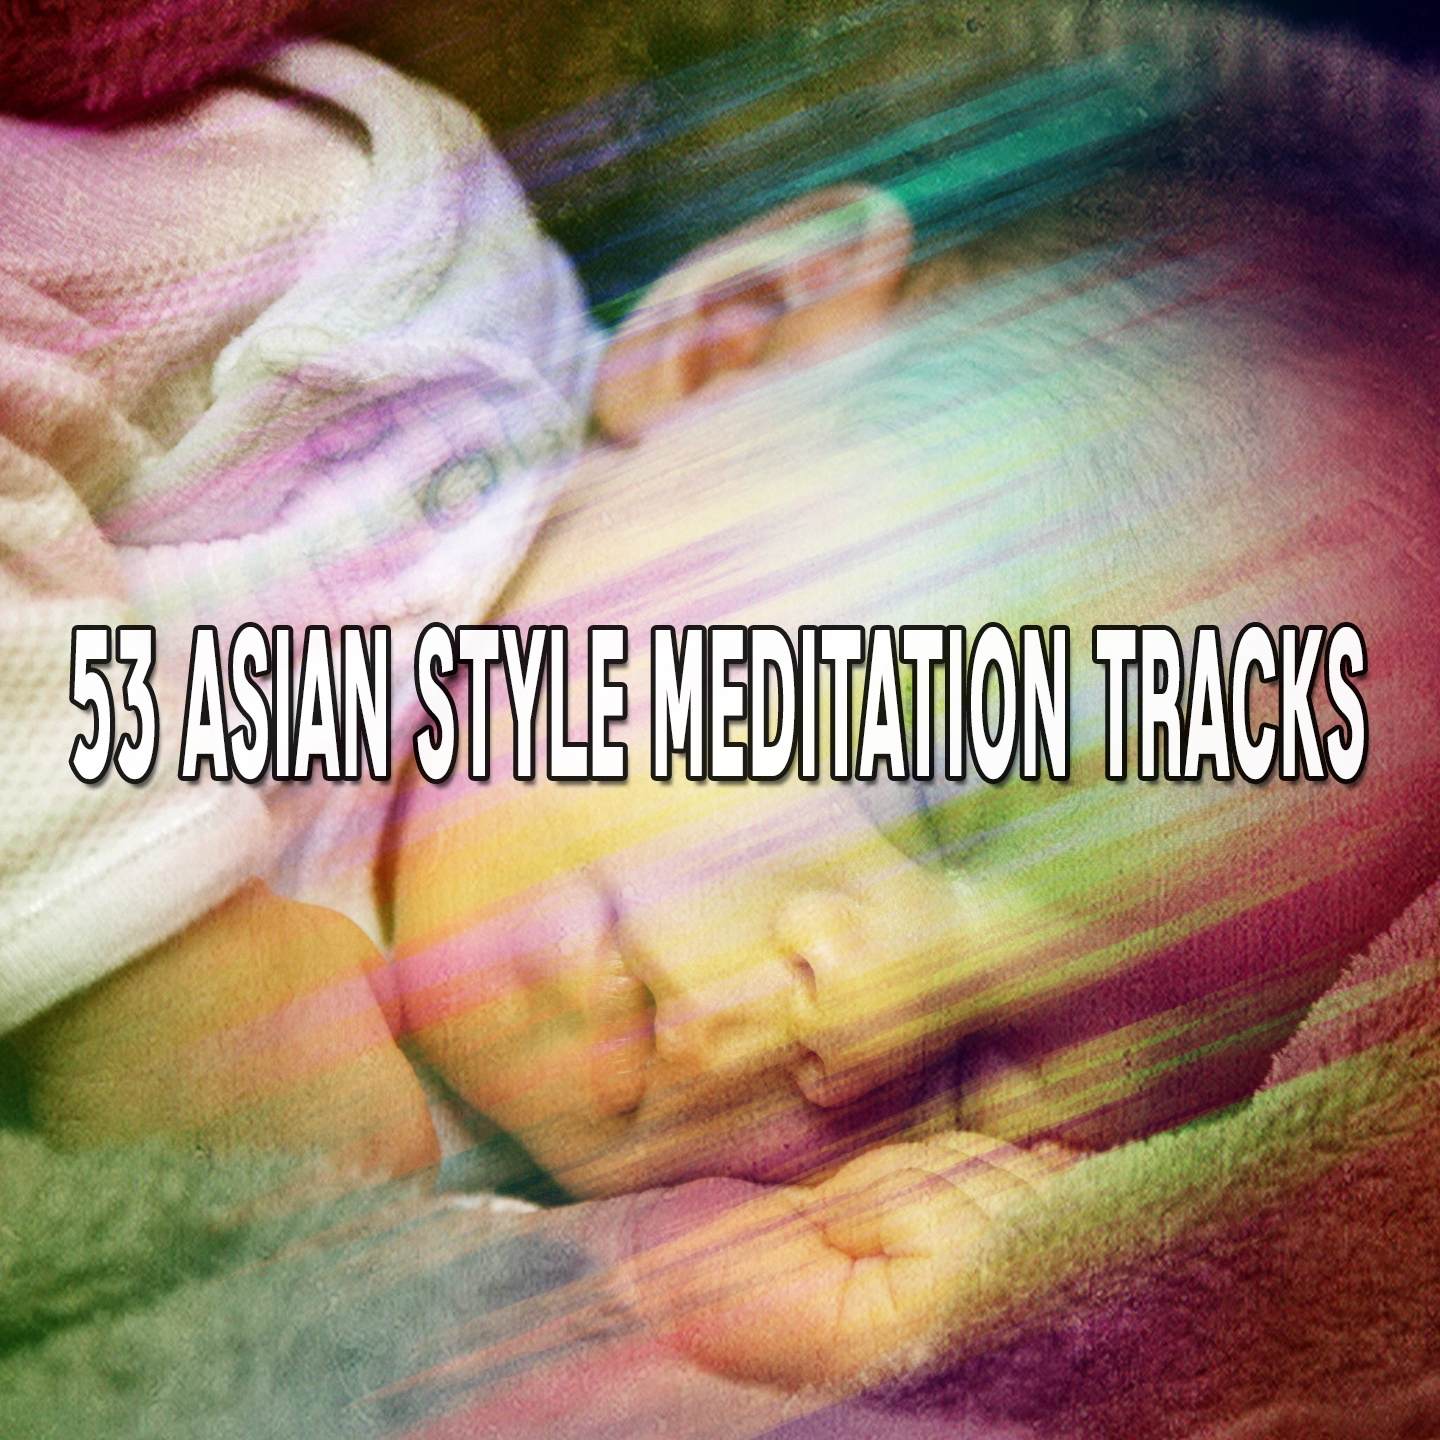 53 Asian Style Meditation Tracks